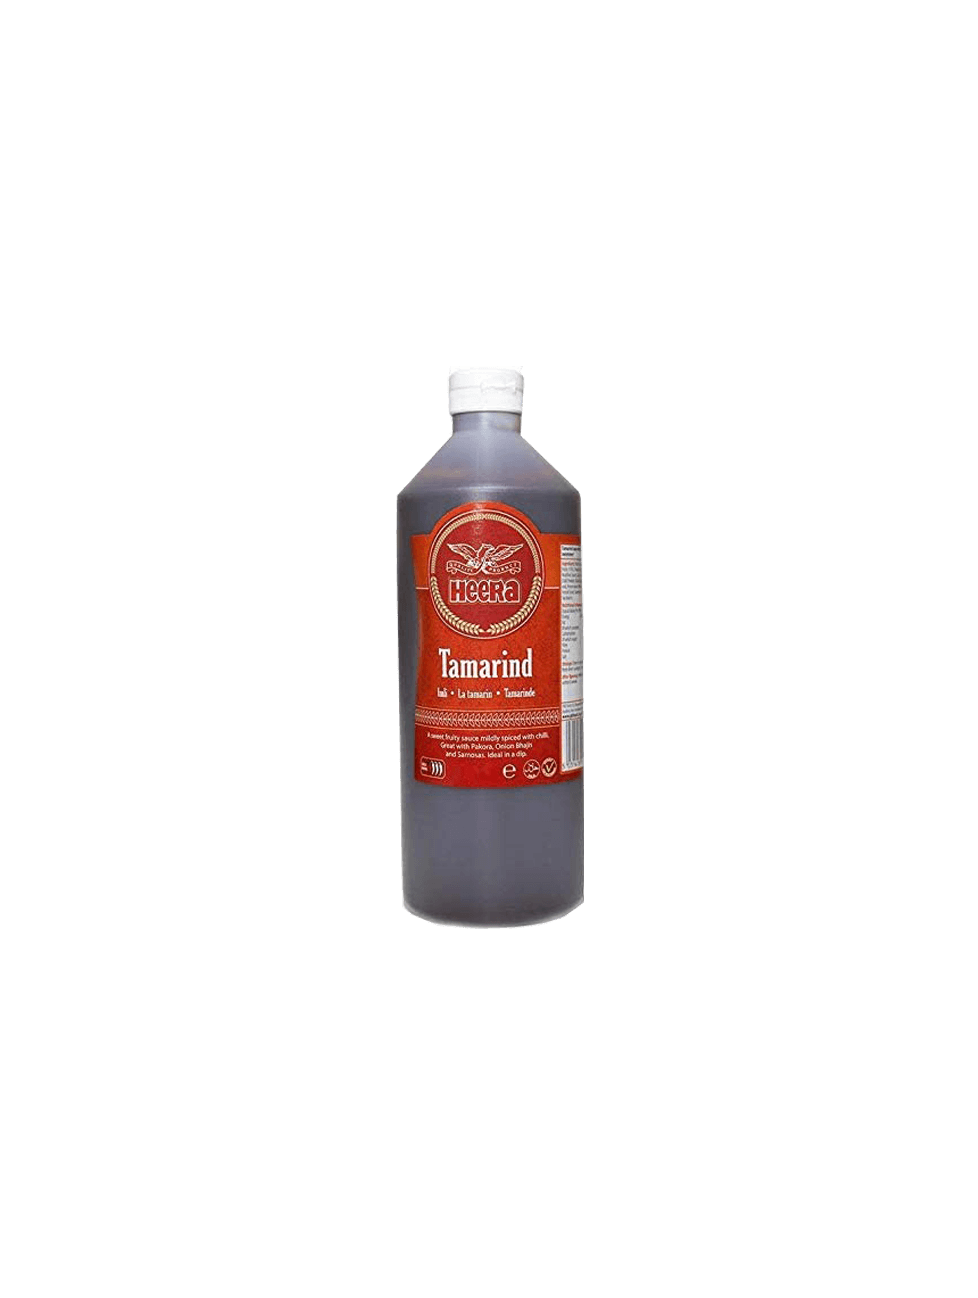 Heera Tamarind Sauce 1ltr (unit)